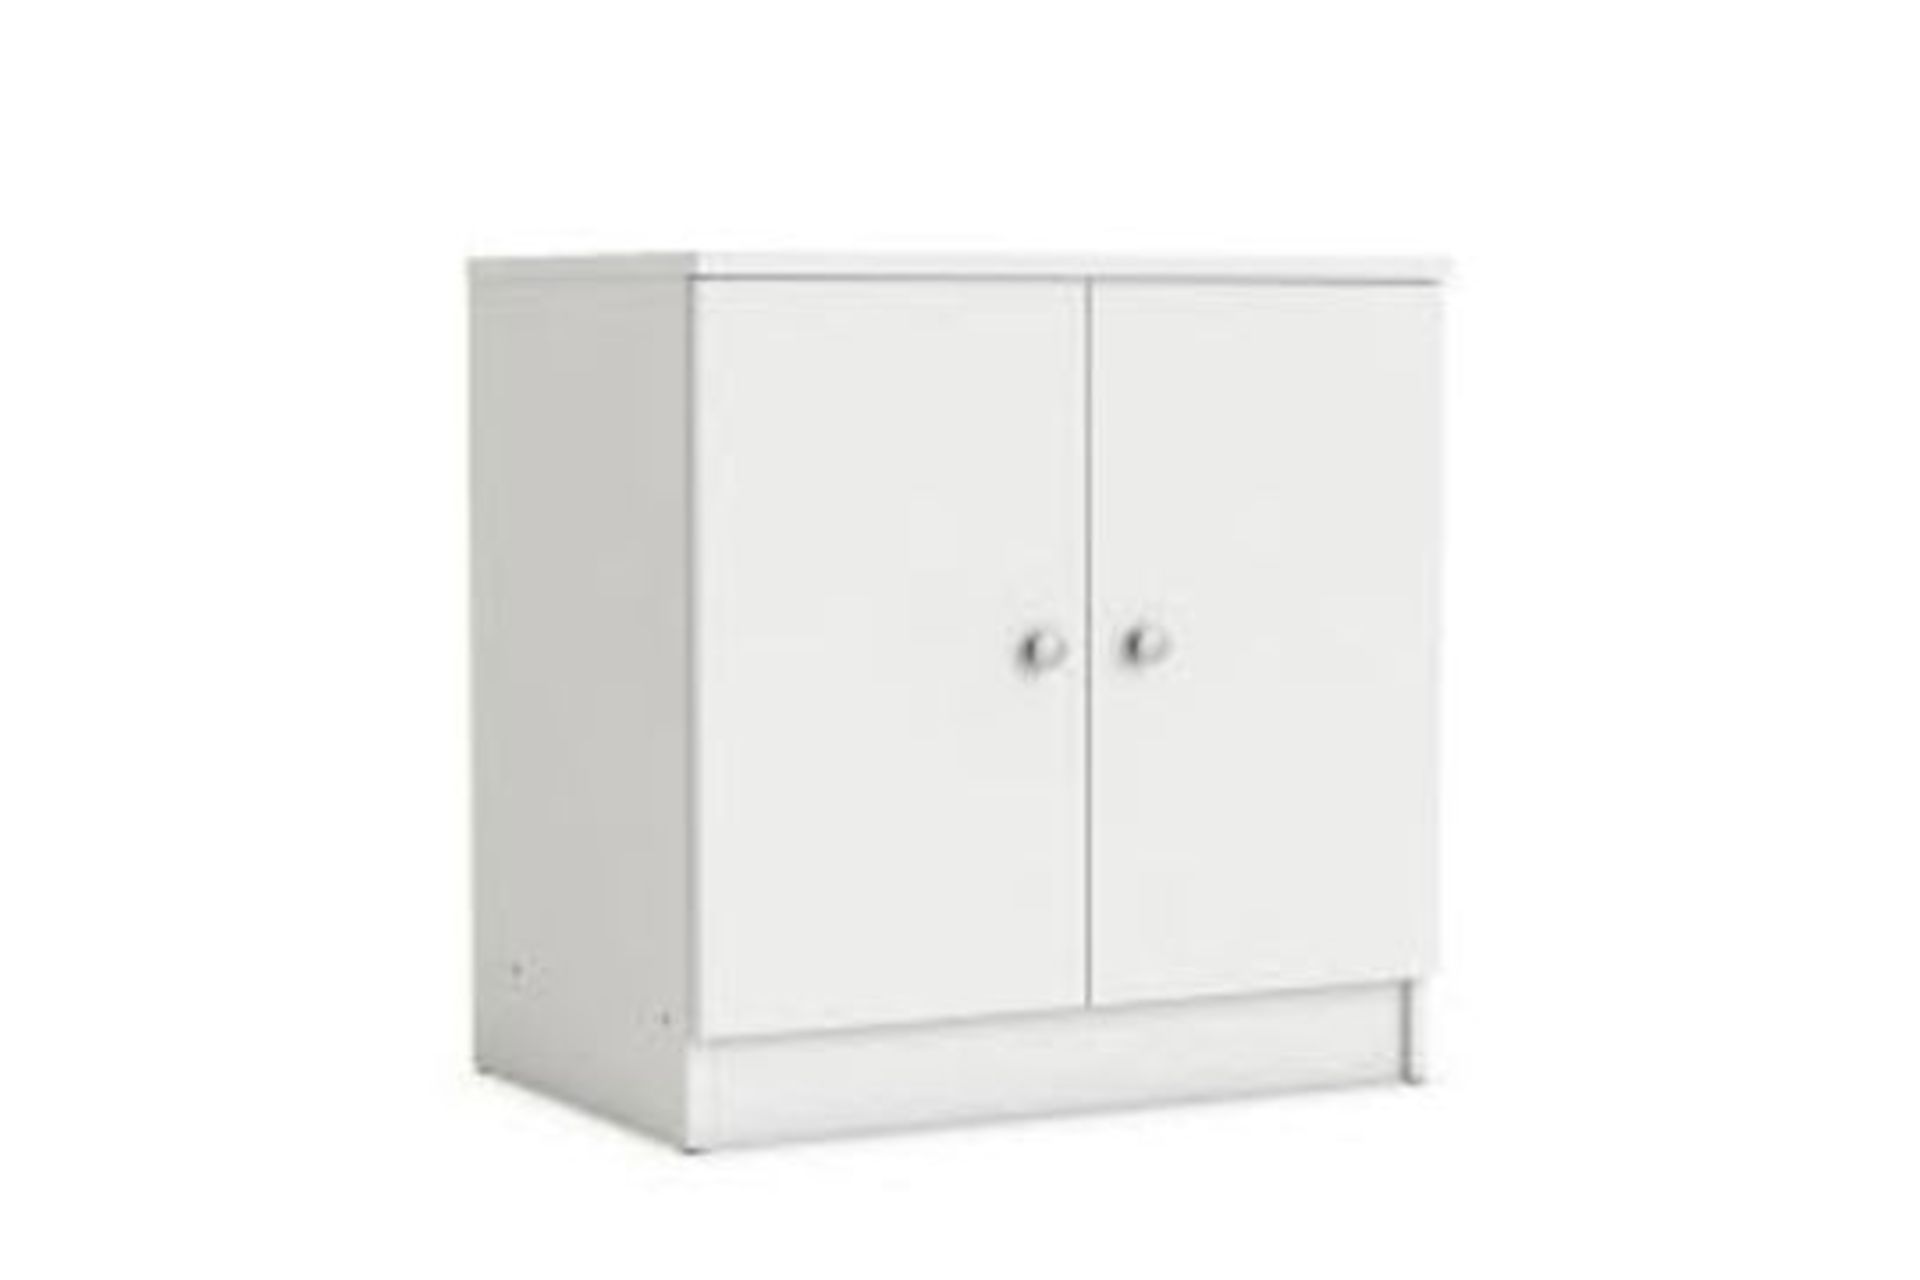 Boxed Santos 2 Door Bathroom Vanity Cabinet In White RRP £80 (3724400) 52.3 x 27.9 x 52.5cm (